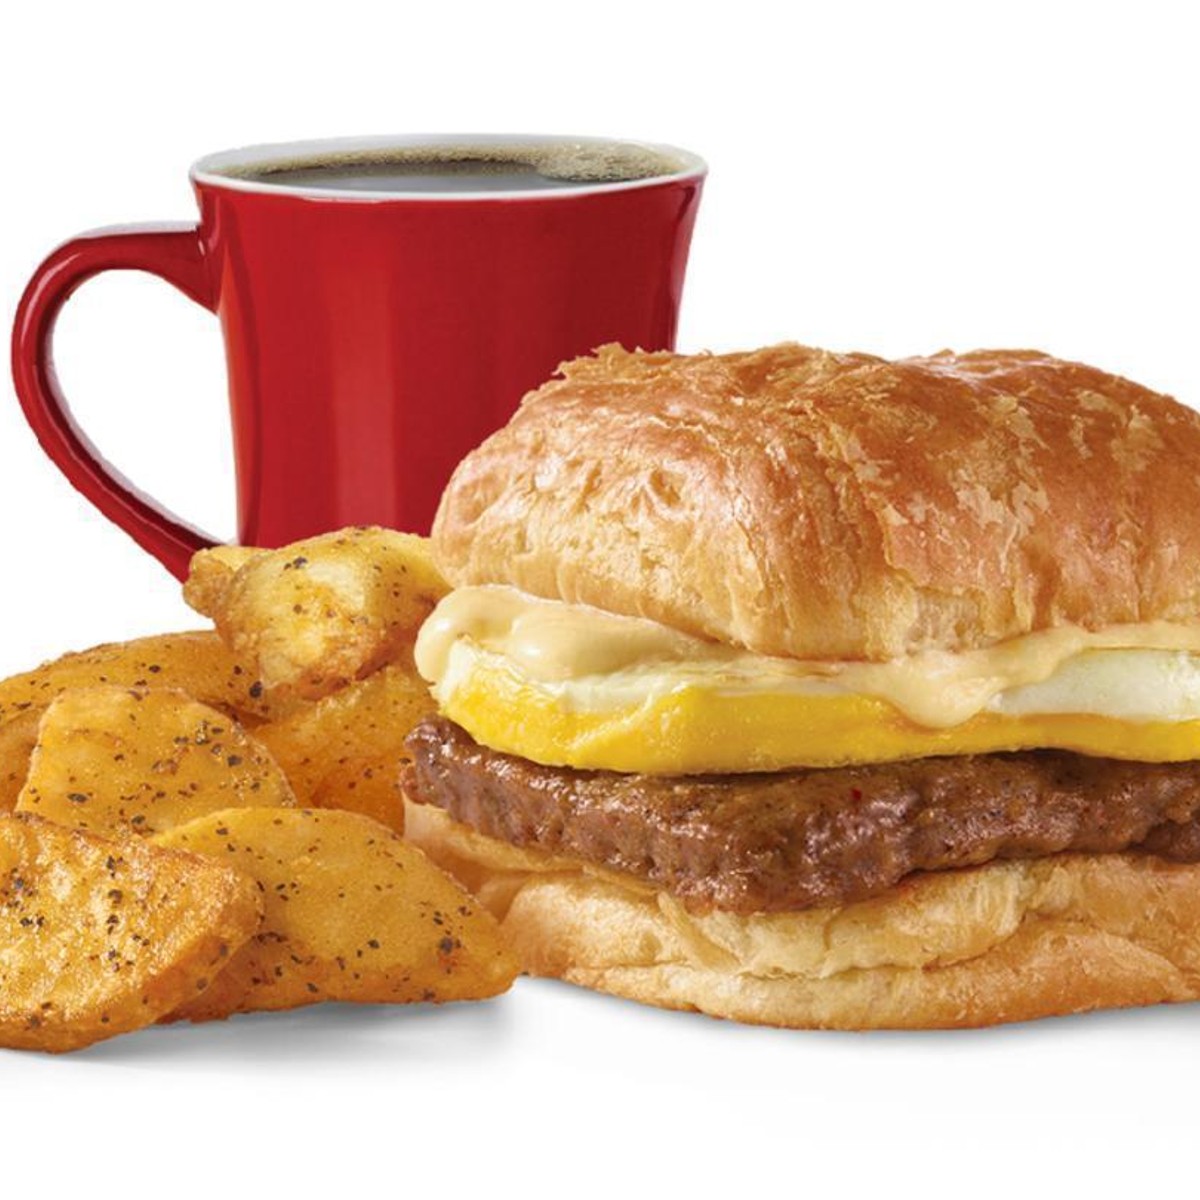 Wendy's Puts Together New 2 for $3 Breakfast Biggie Bundles Deal